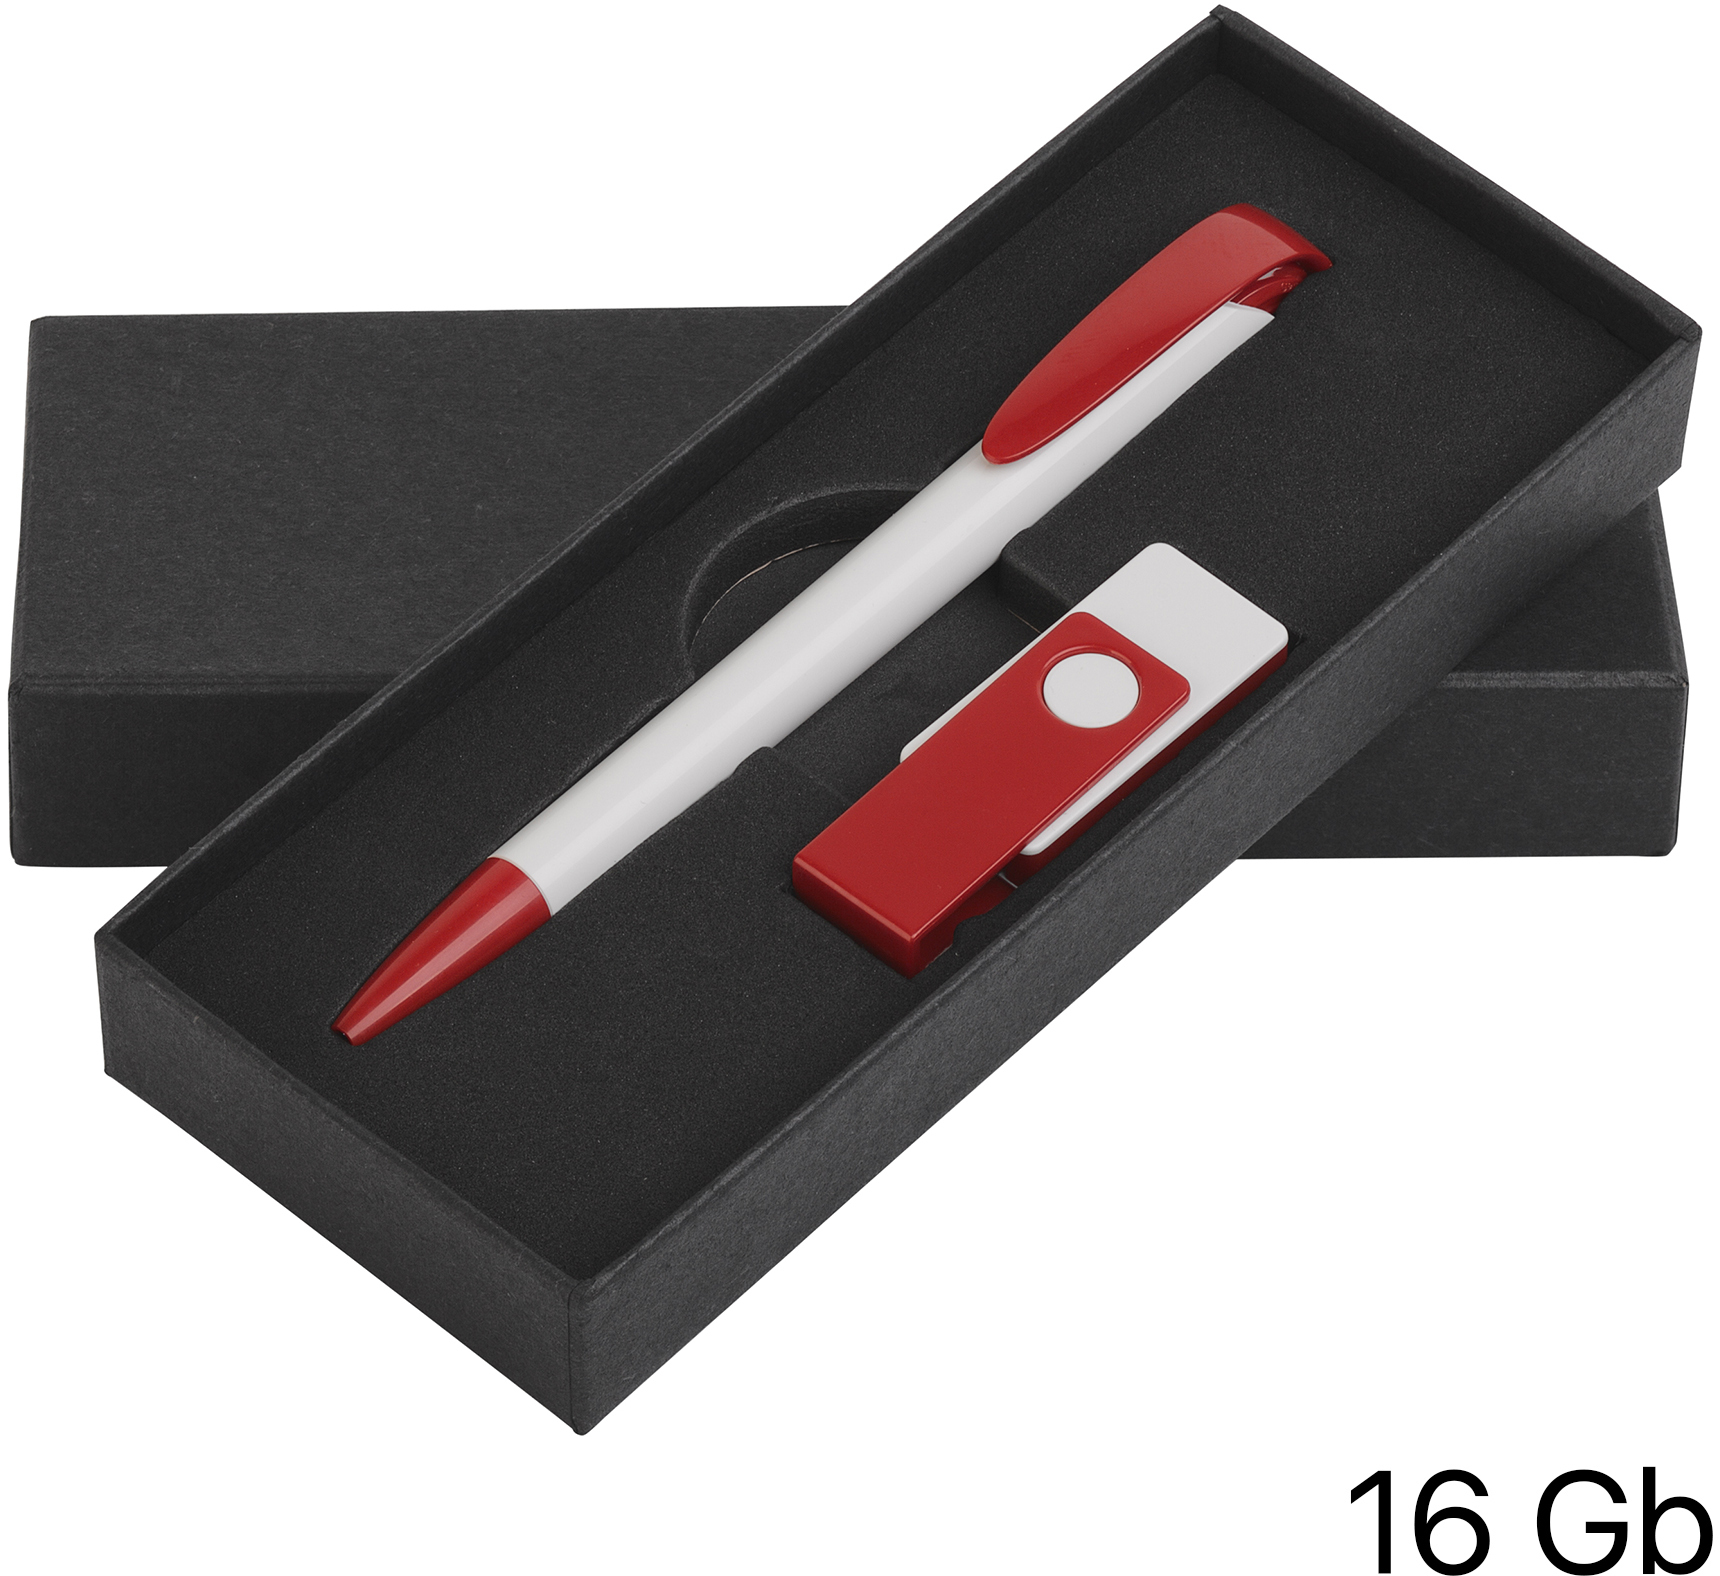 Артикул: E70120-1/4/16Gb — Набор ручка + флеш-карта 16Гб в футляре, белый/красный